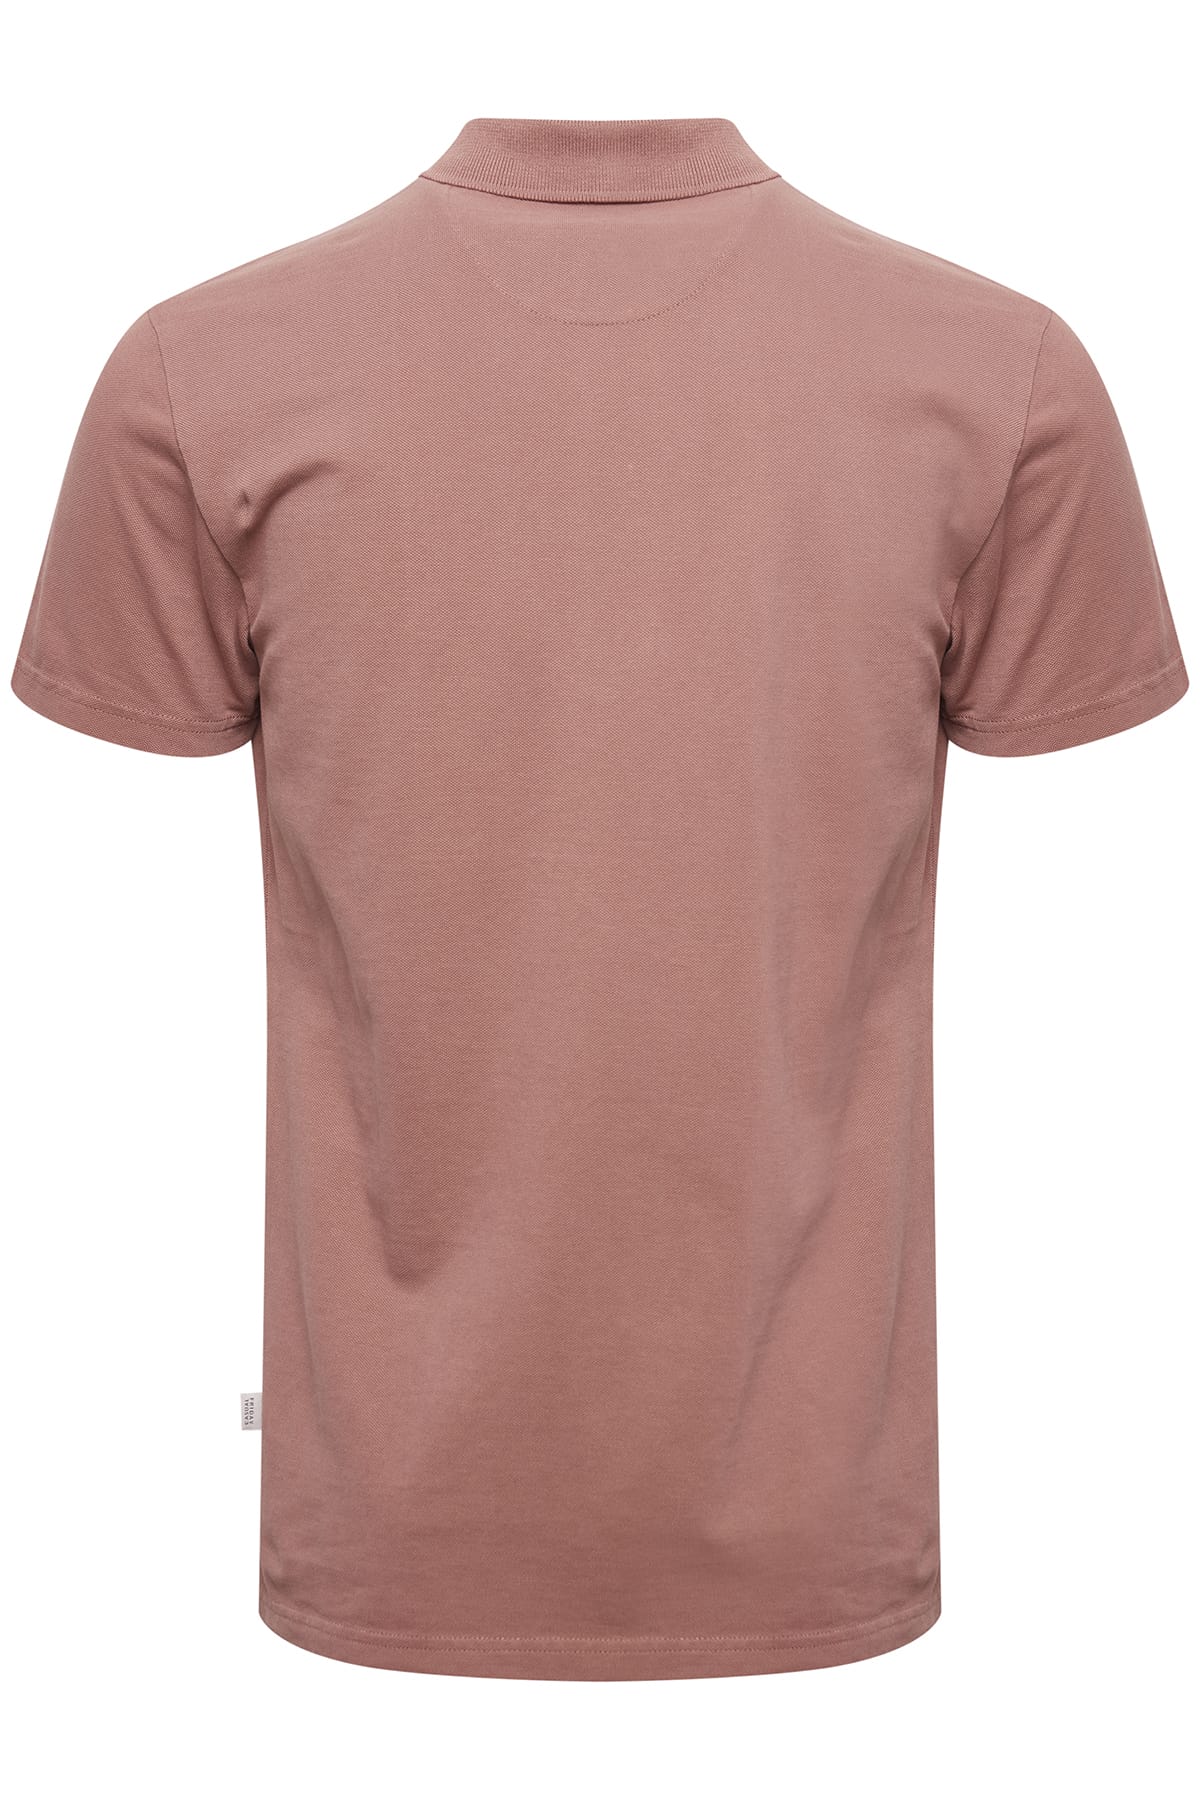 T-Shirt Theis garment dyed polo shirt Nutmeg T-Shirt Casual Friday 